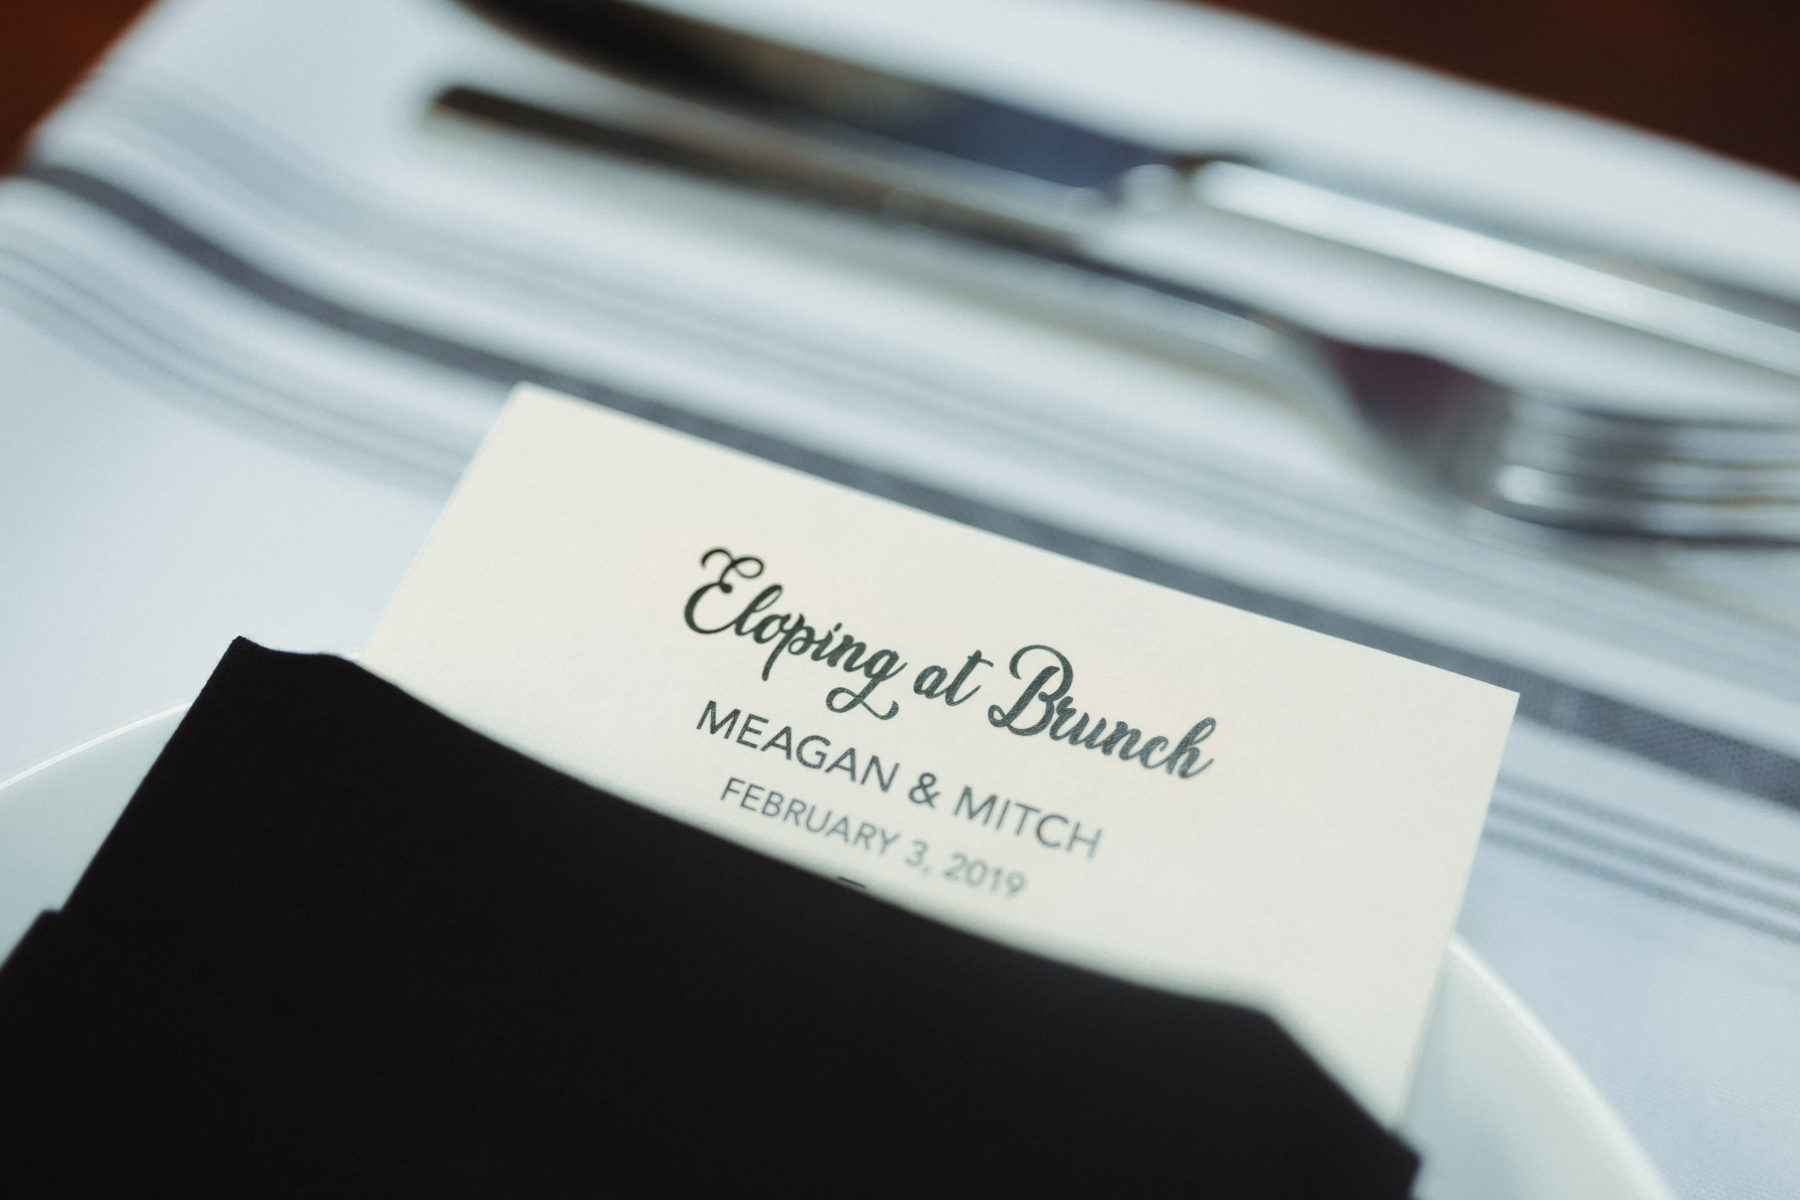 Wedding menu design: Nashville brunch elopement featured on Nashville Bride Guide